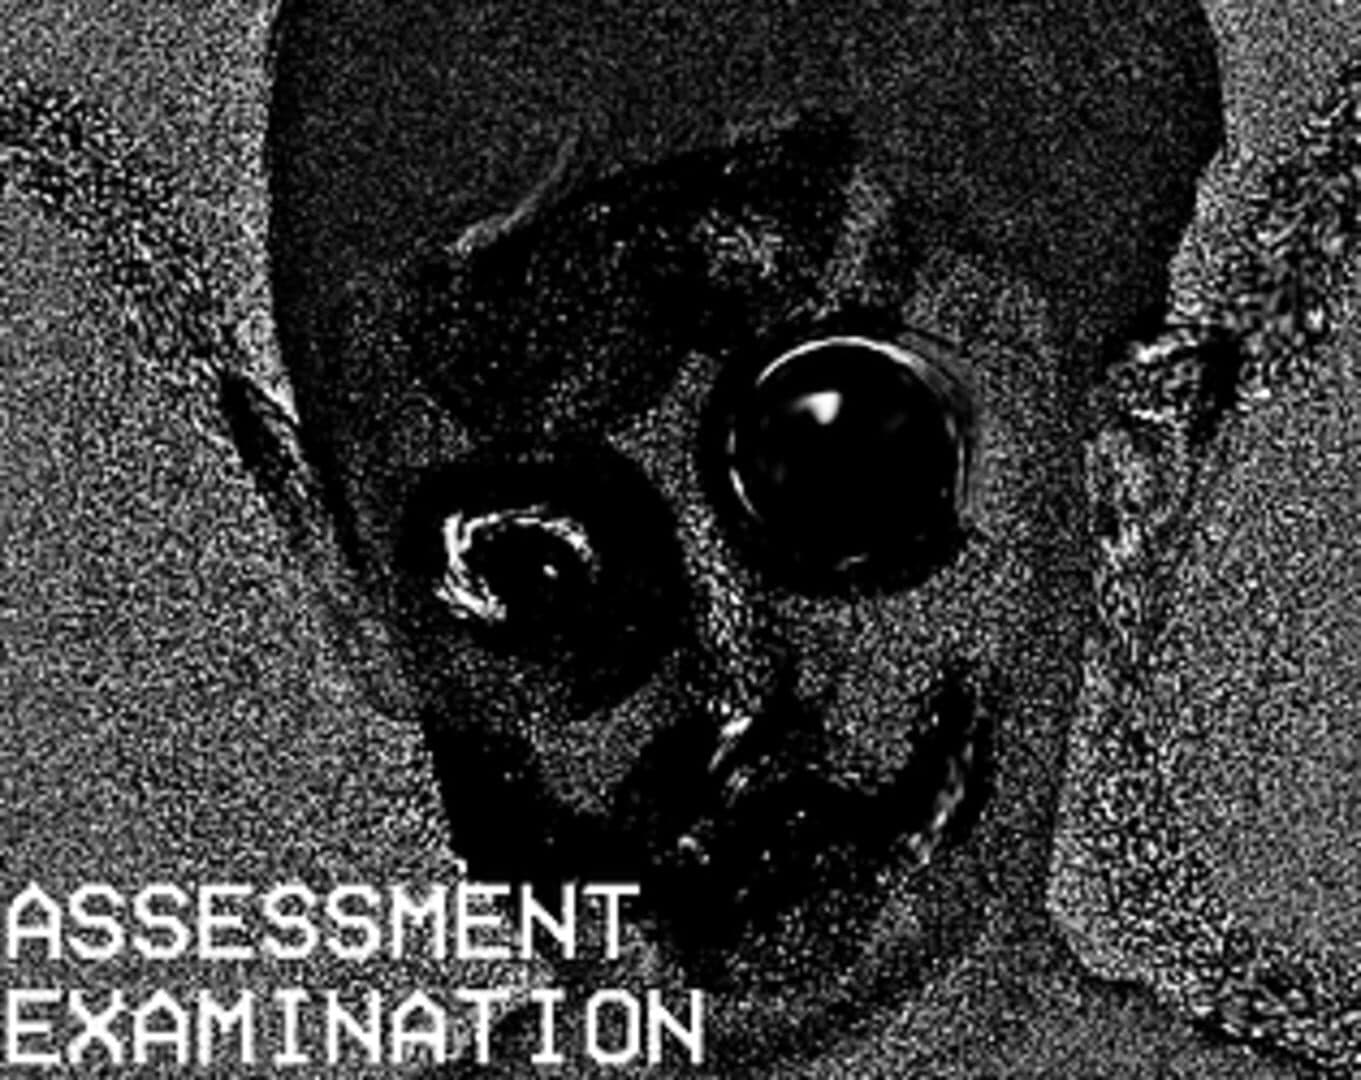 Assessment Examination cover art